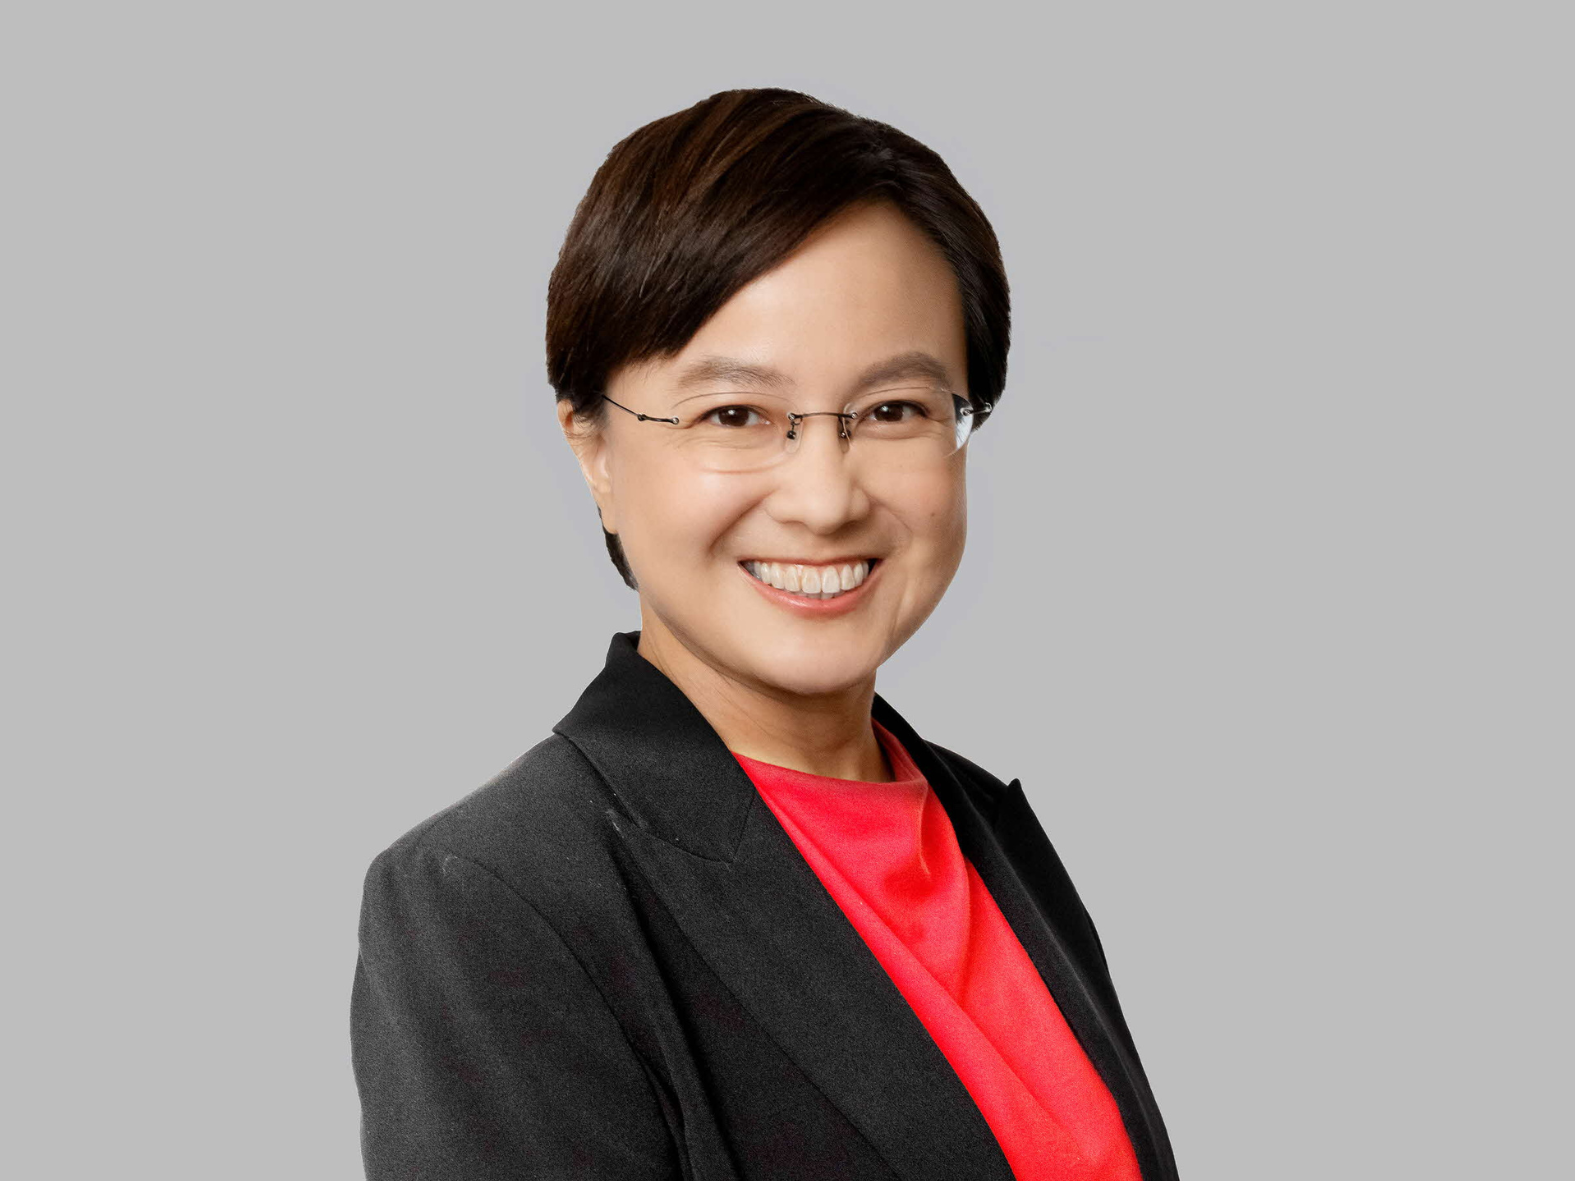 Mrs Tan Chen Kee